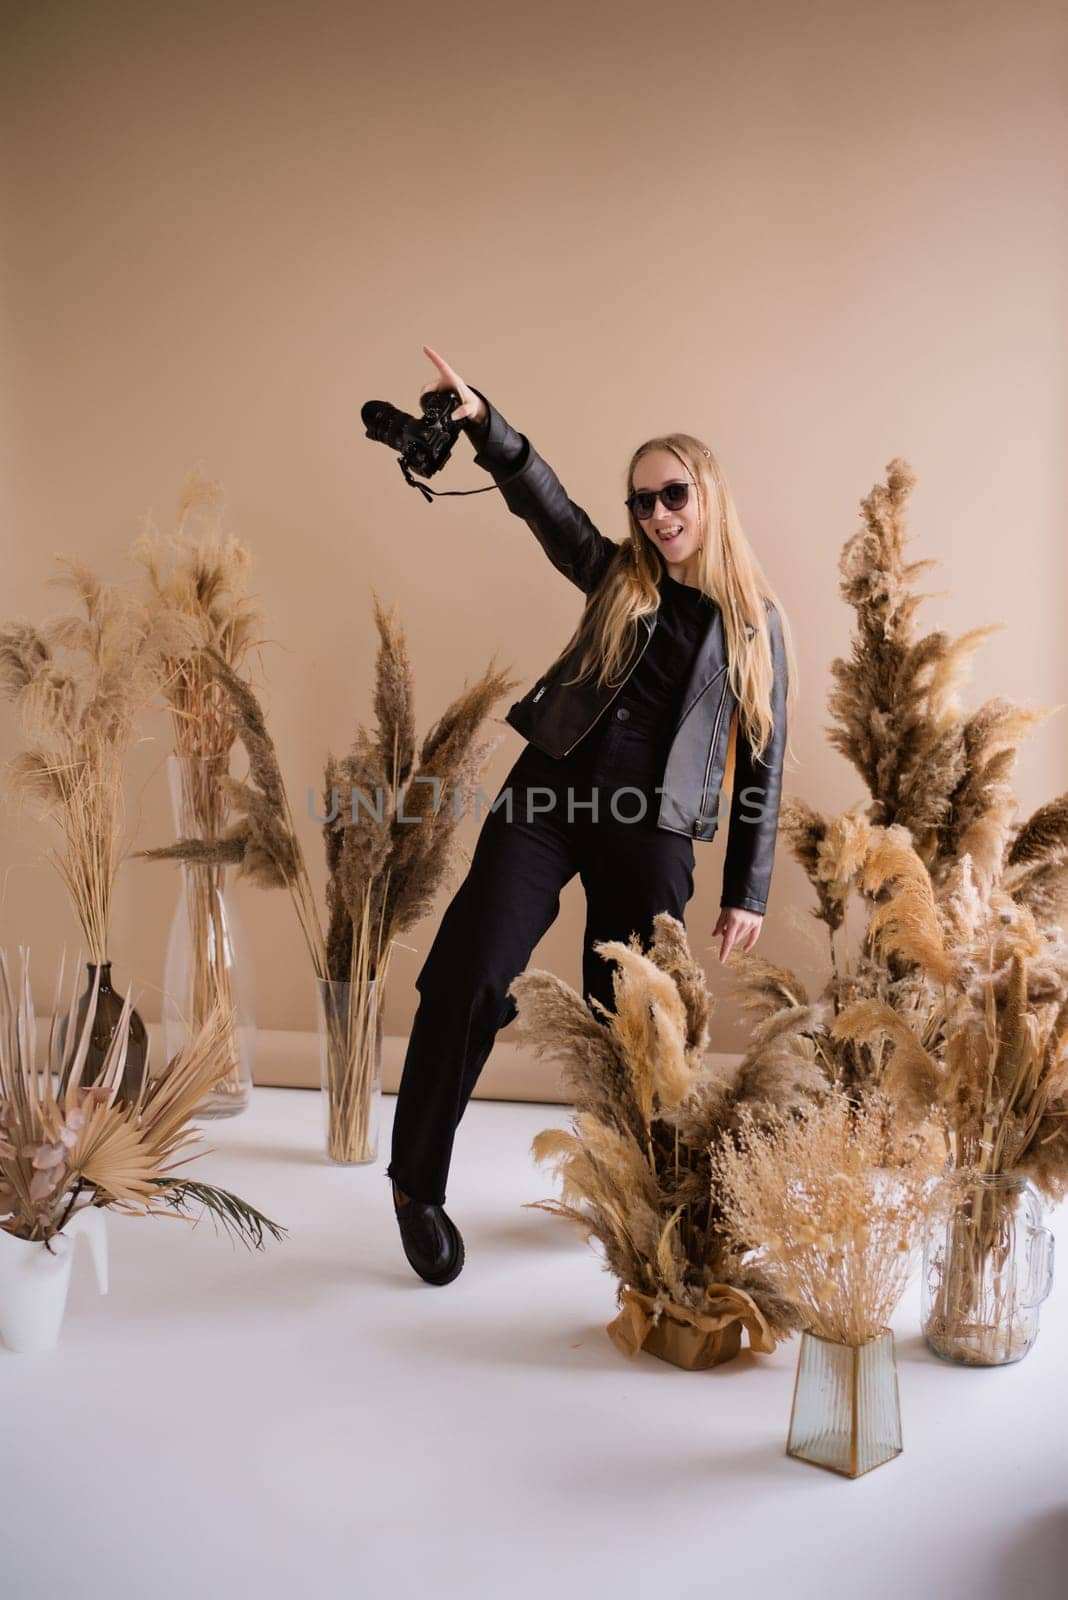 A woman photographer at production photo studio by OksanaFedorchuk